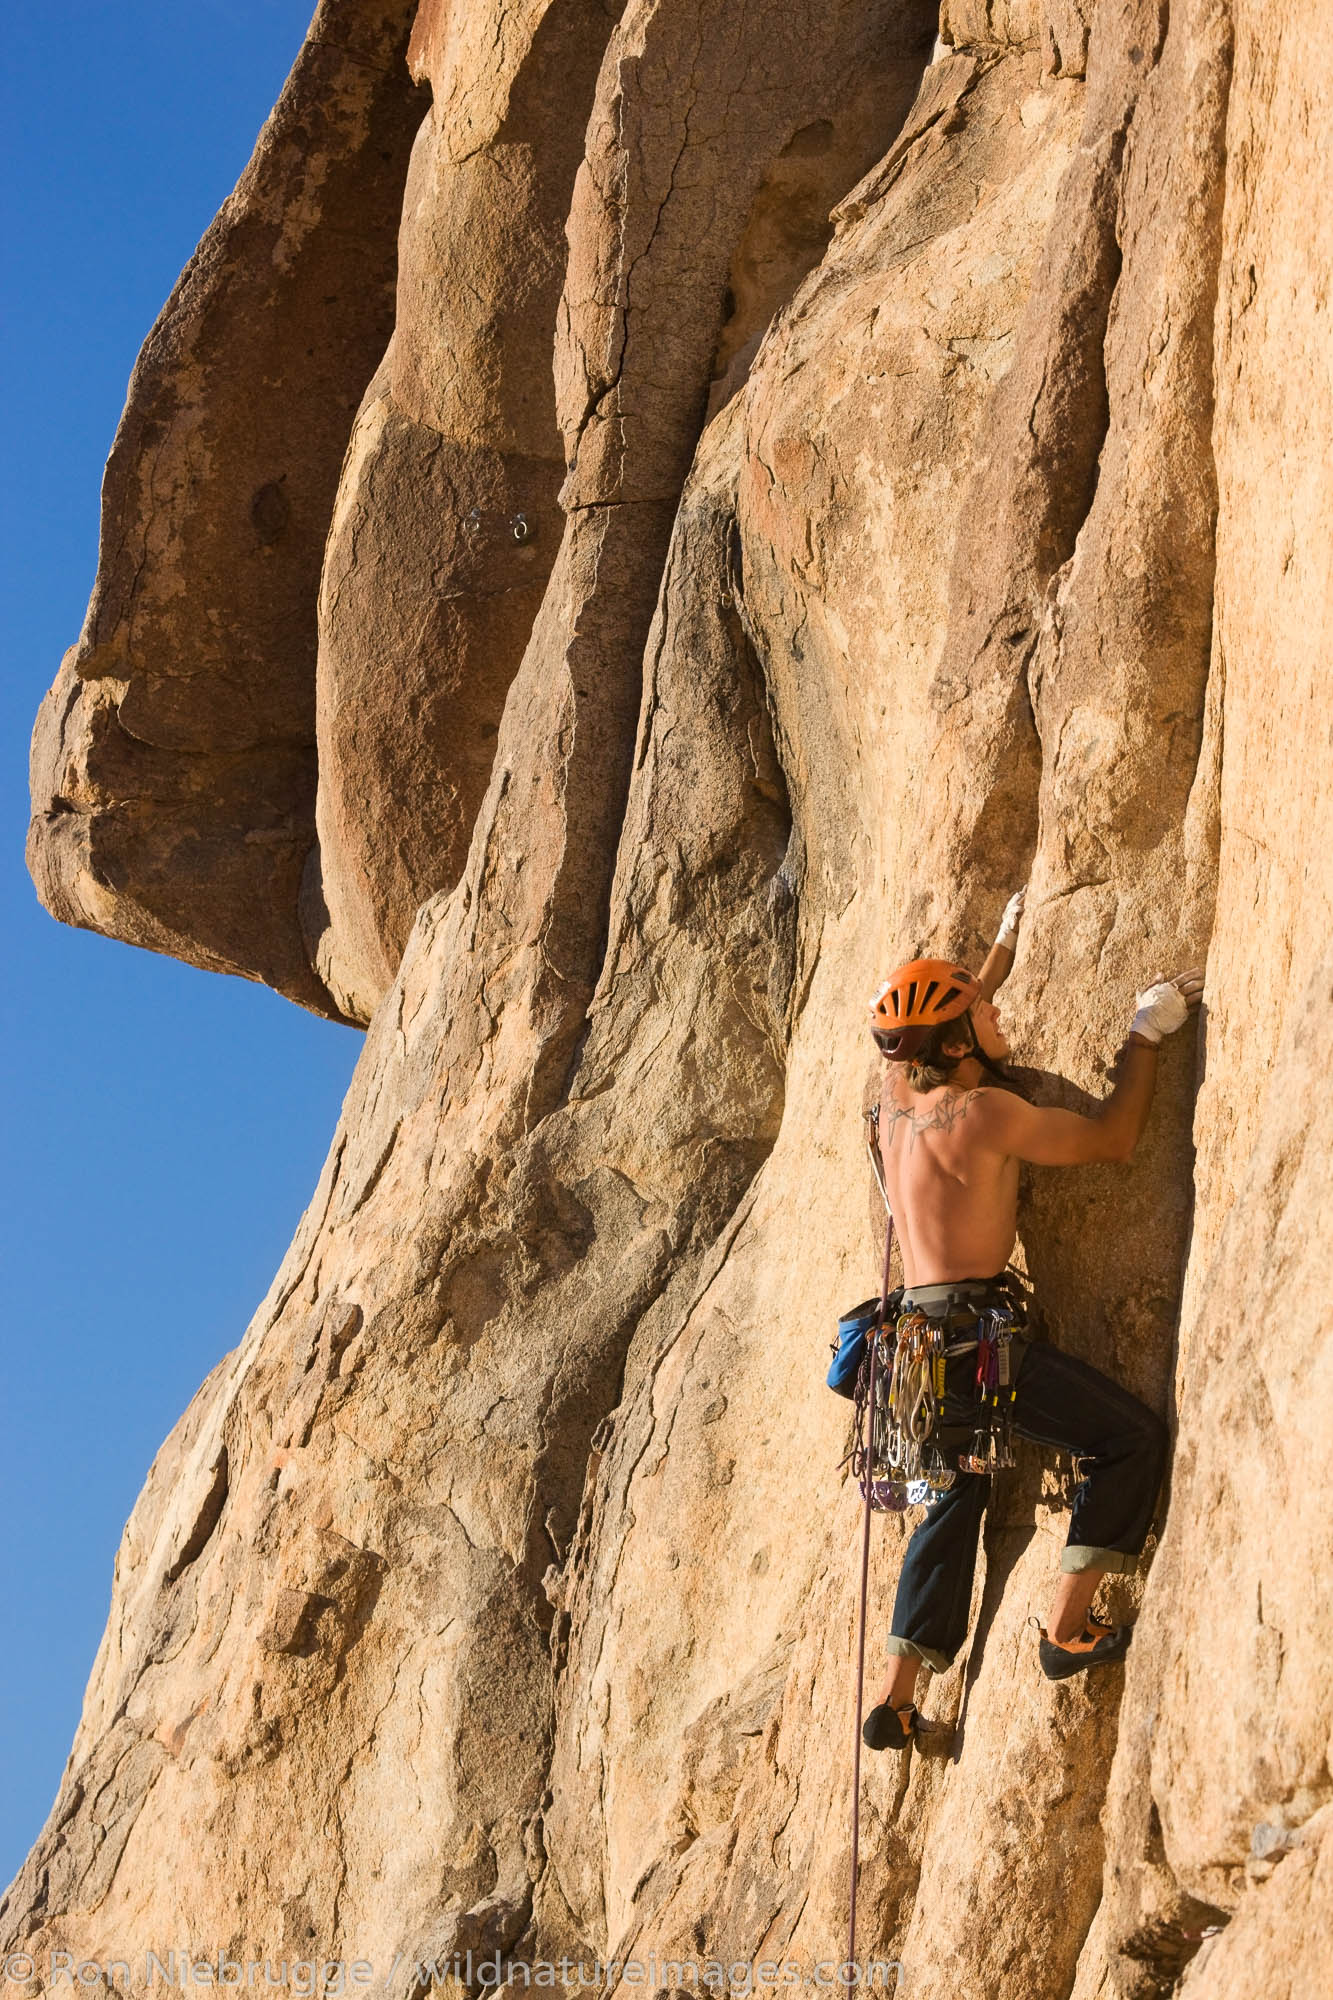 Matt VanBiene rock climbing in Joshua Tree National Park, California.  (model released)